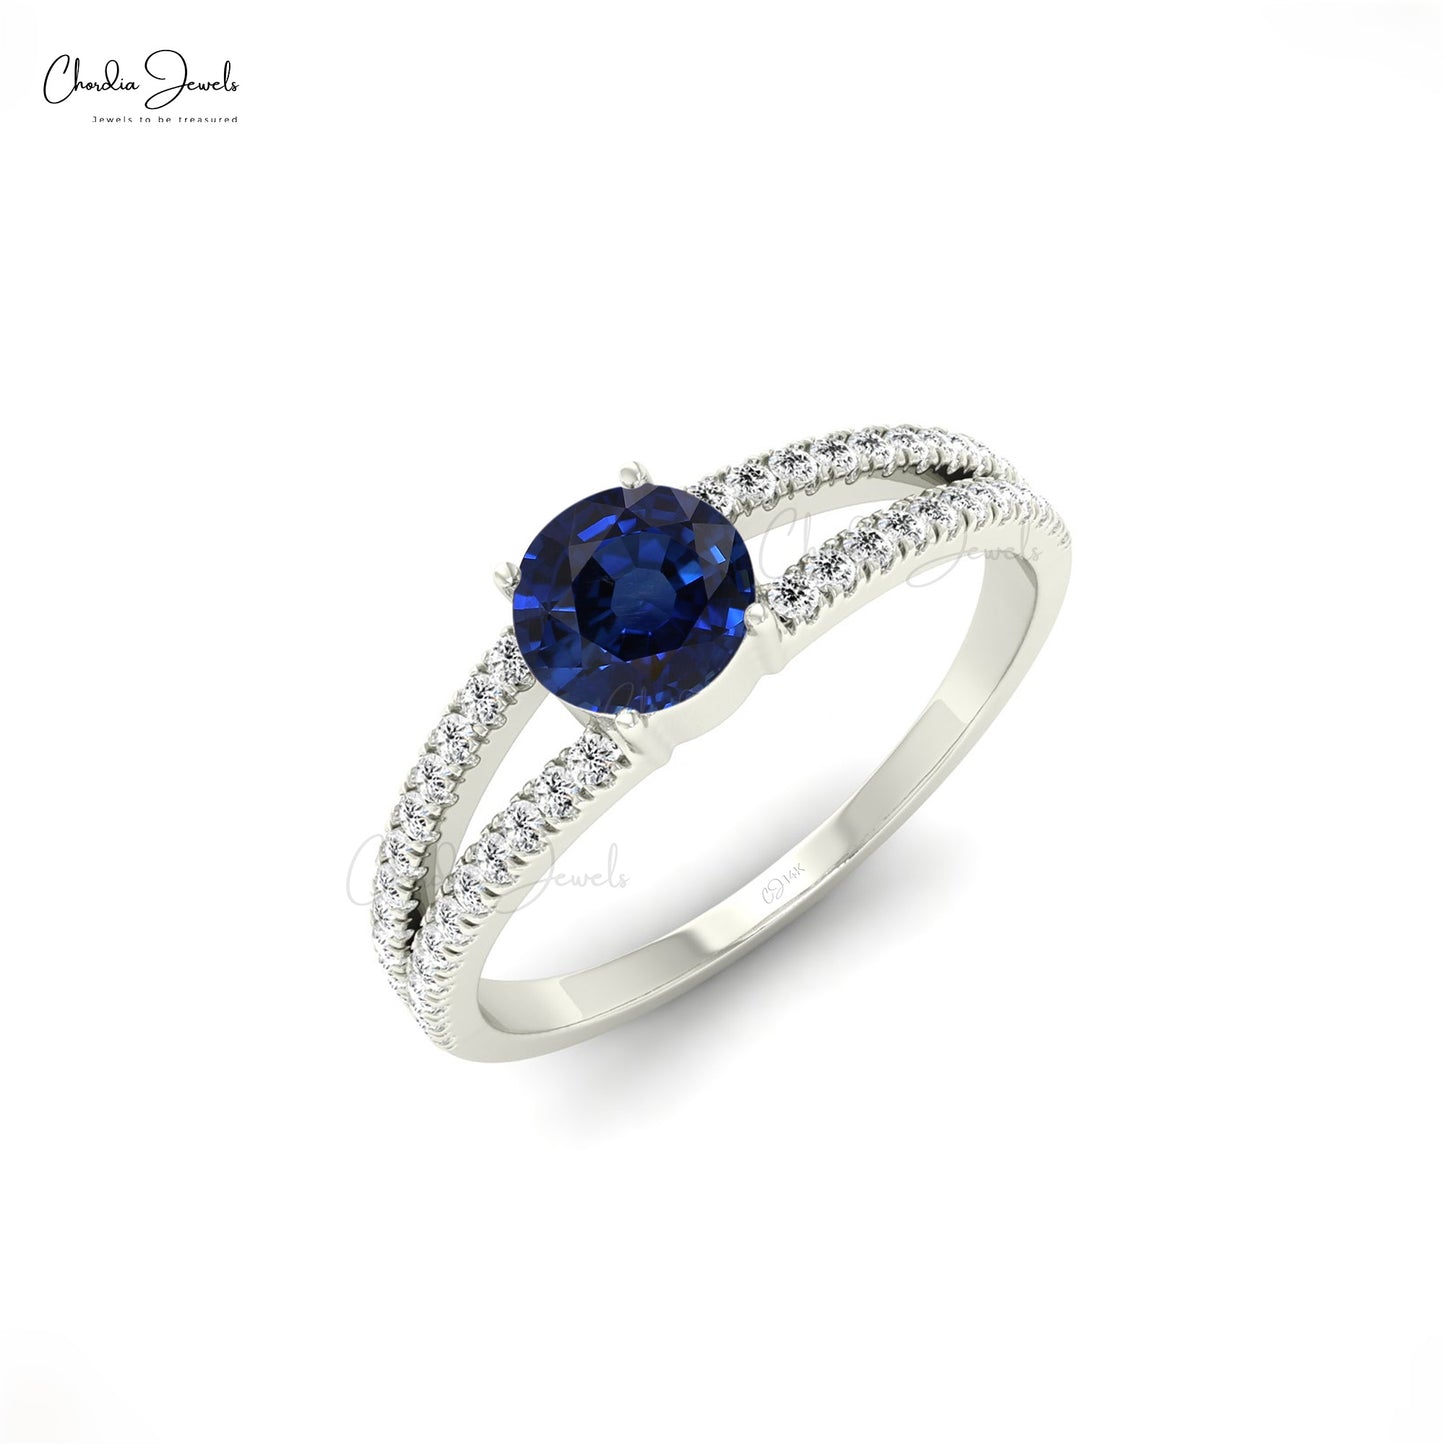 Buy Blue Sapphire Ring